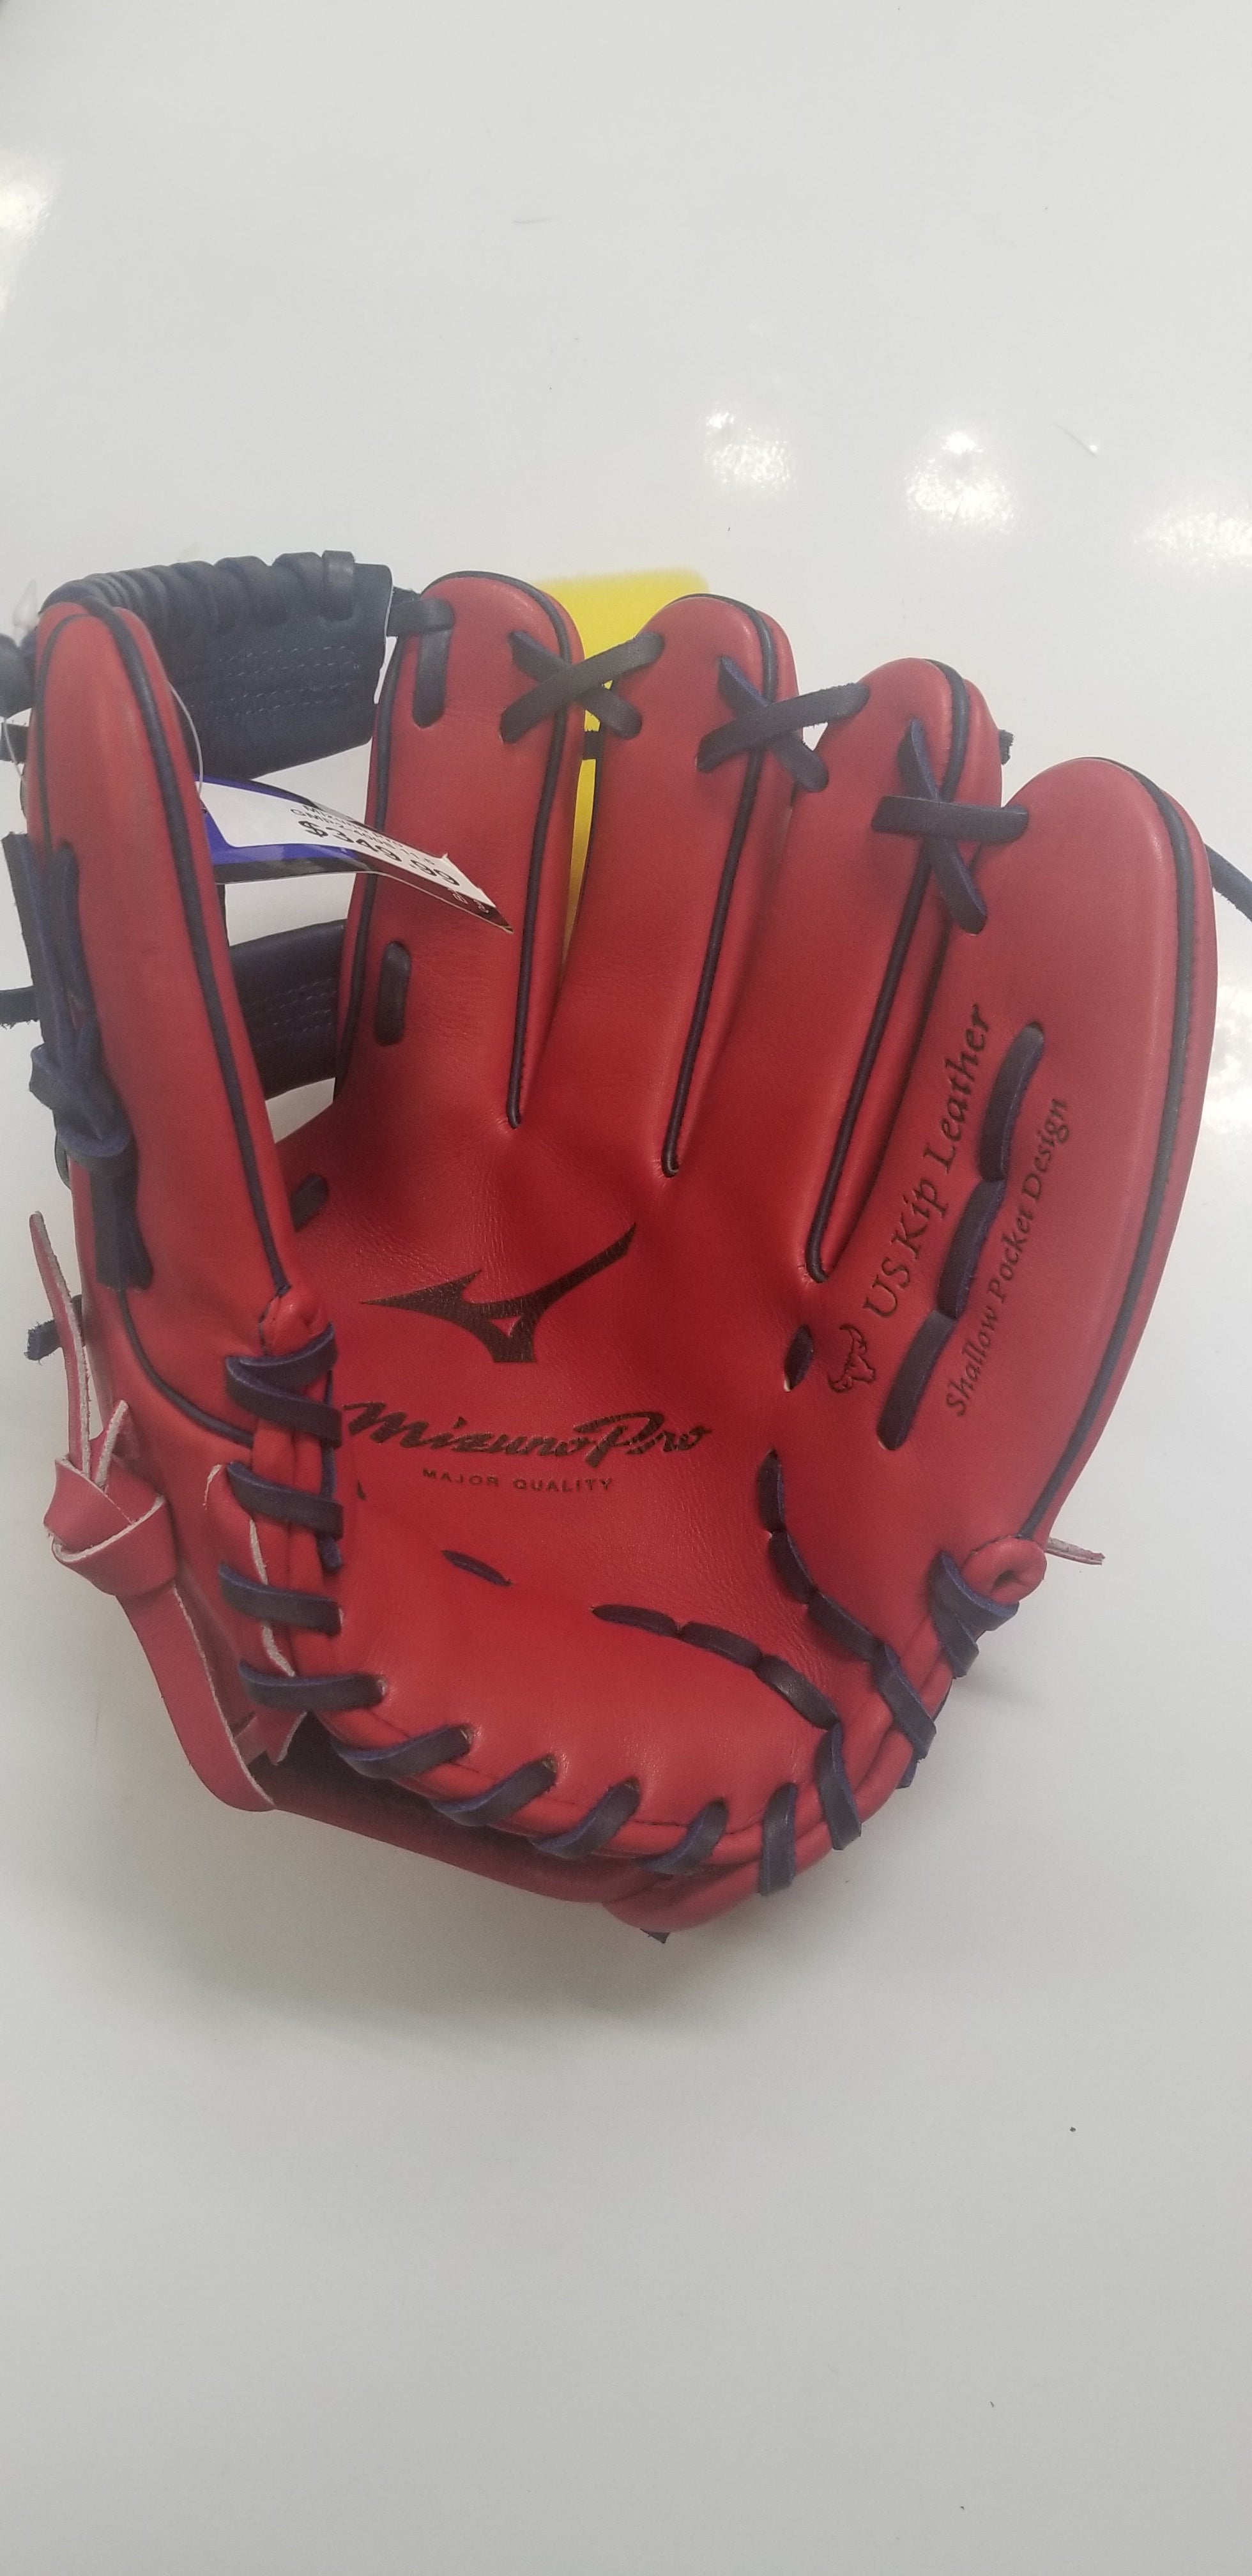 Mizuno Pro 11.5 Infield Baseball Glove Andrelton Simmons Model 312908